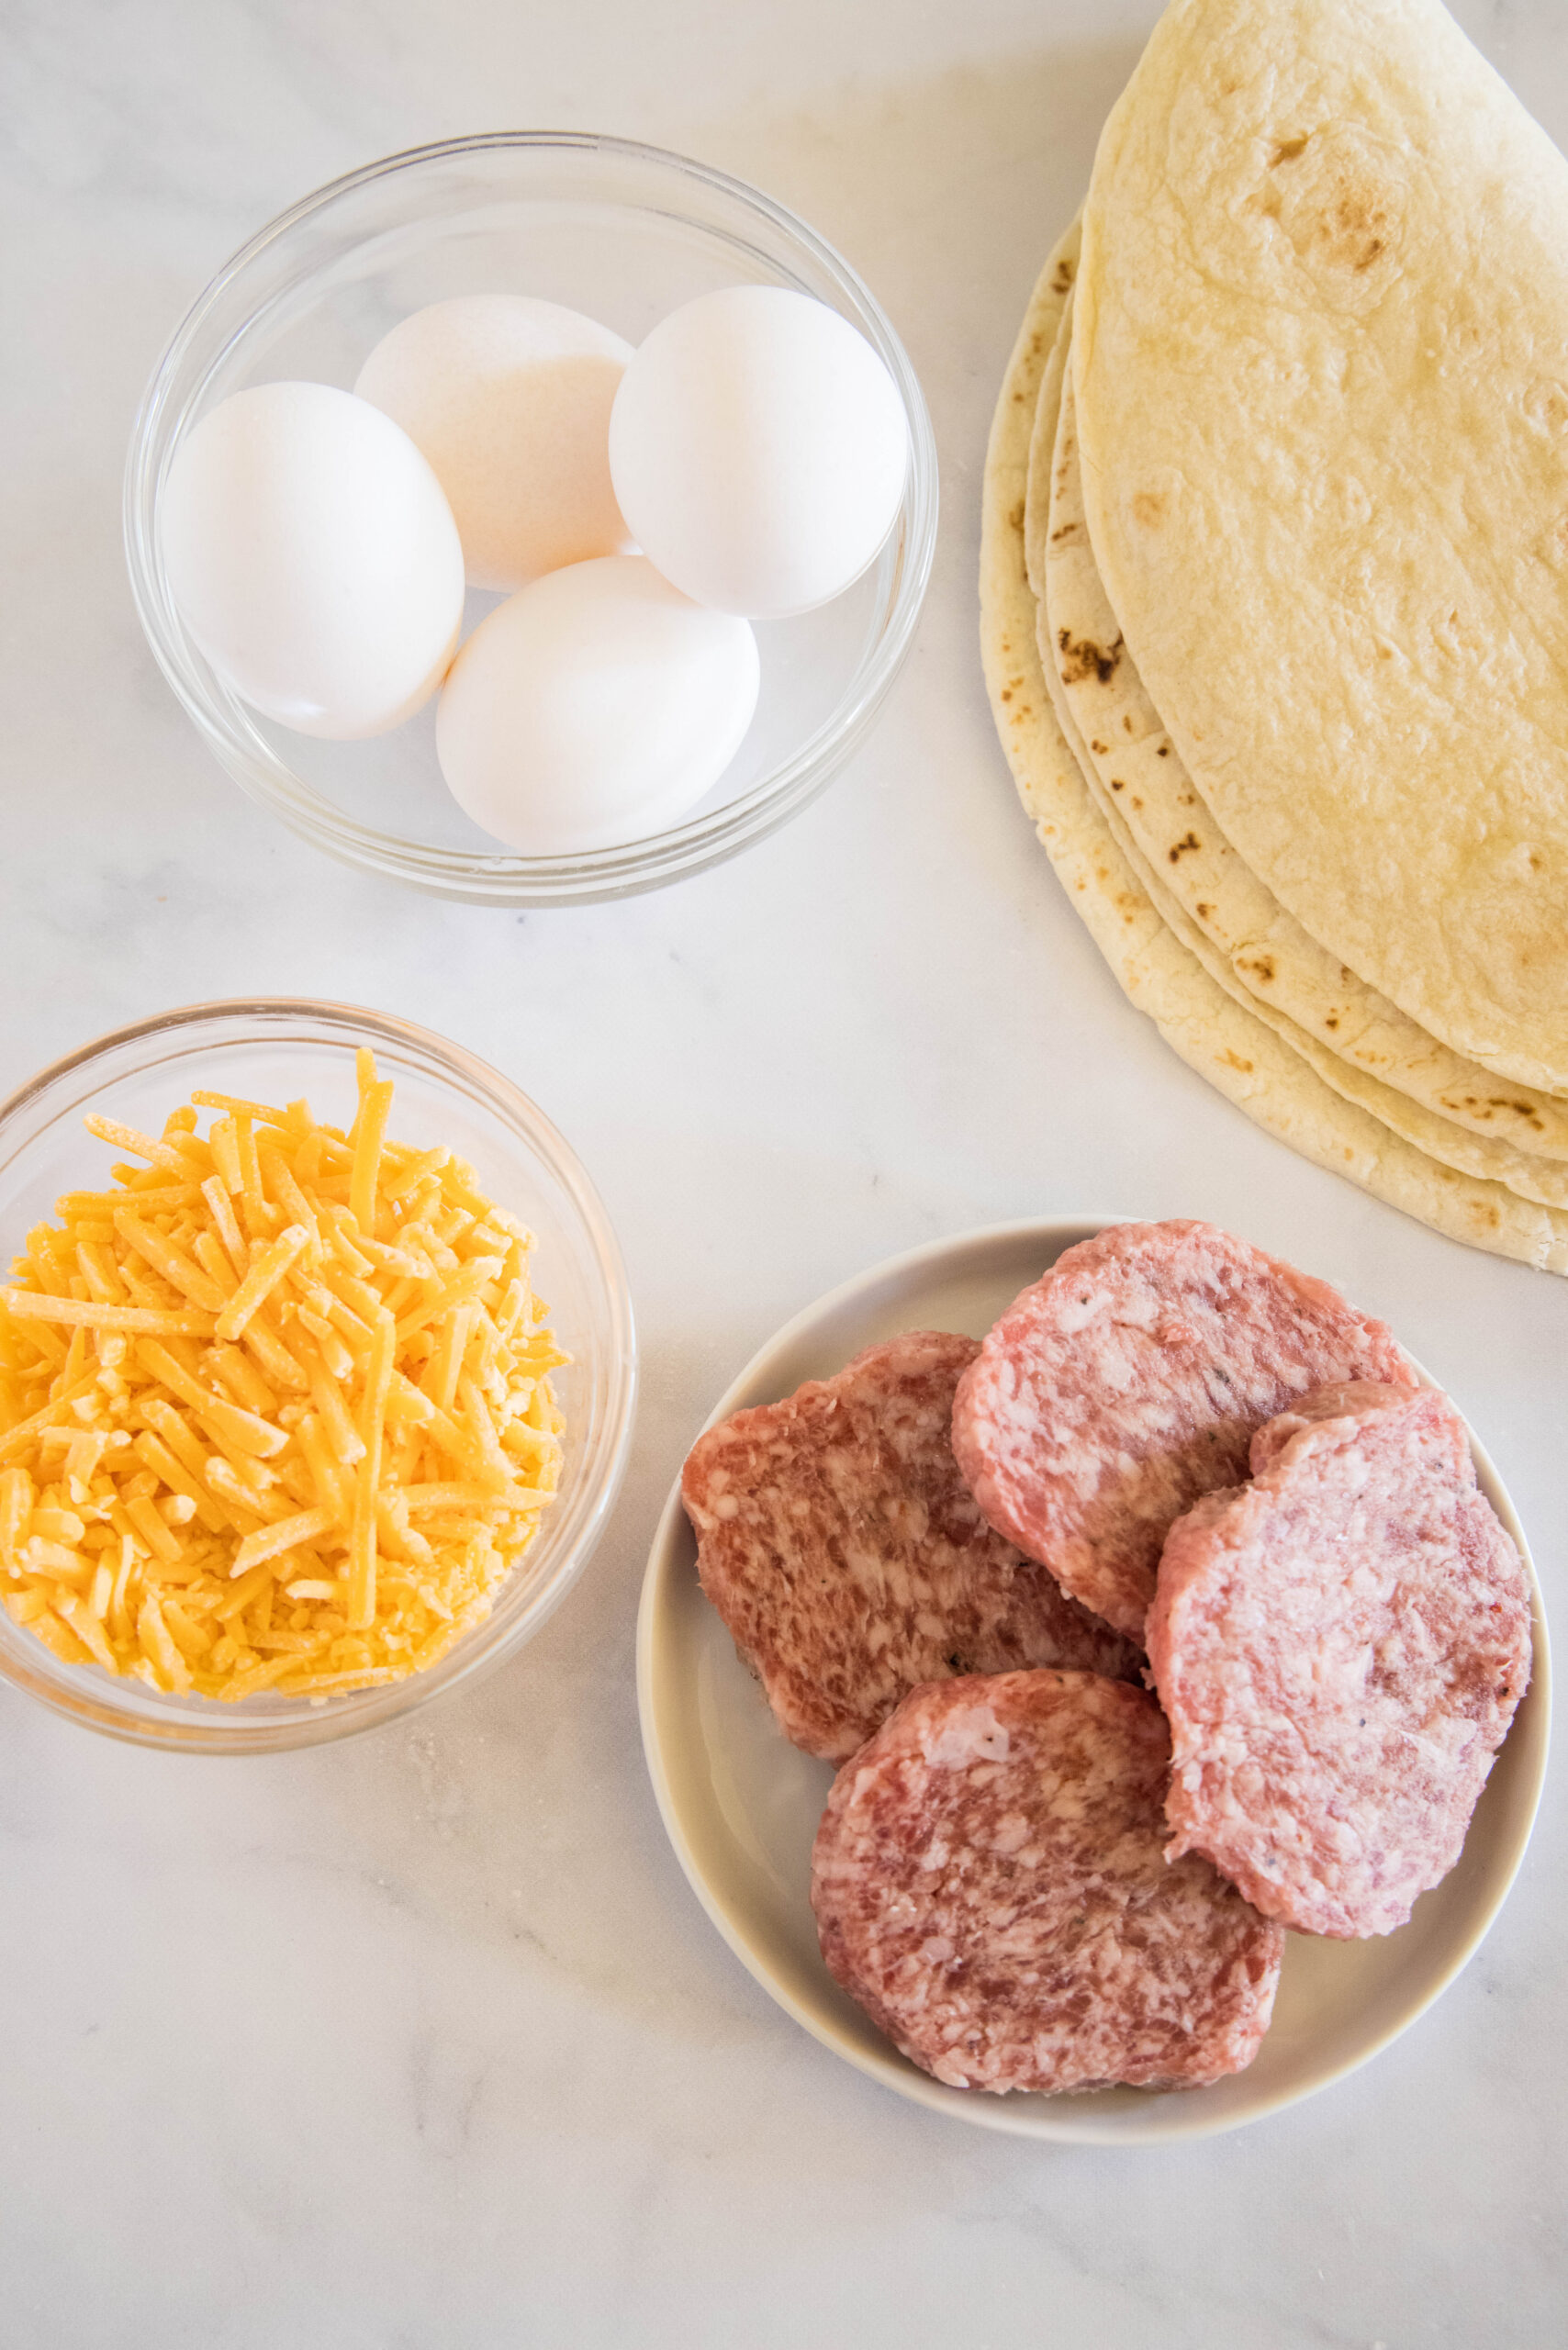 Ingredients for breakfast quesadillas.